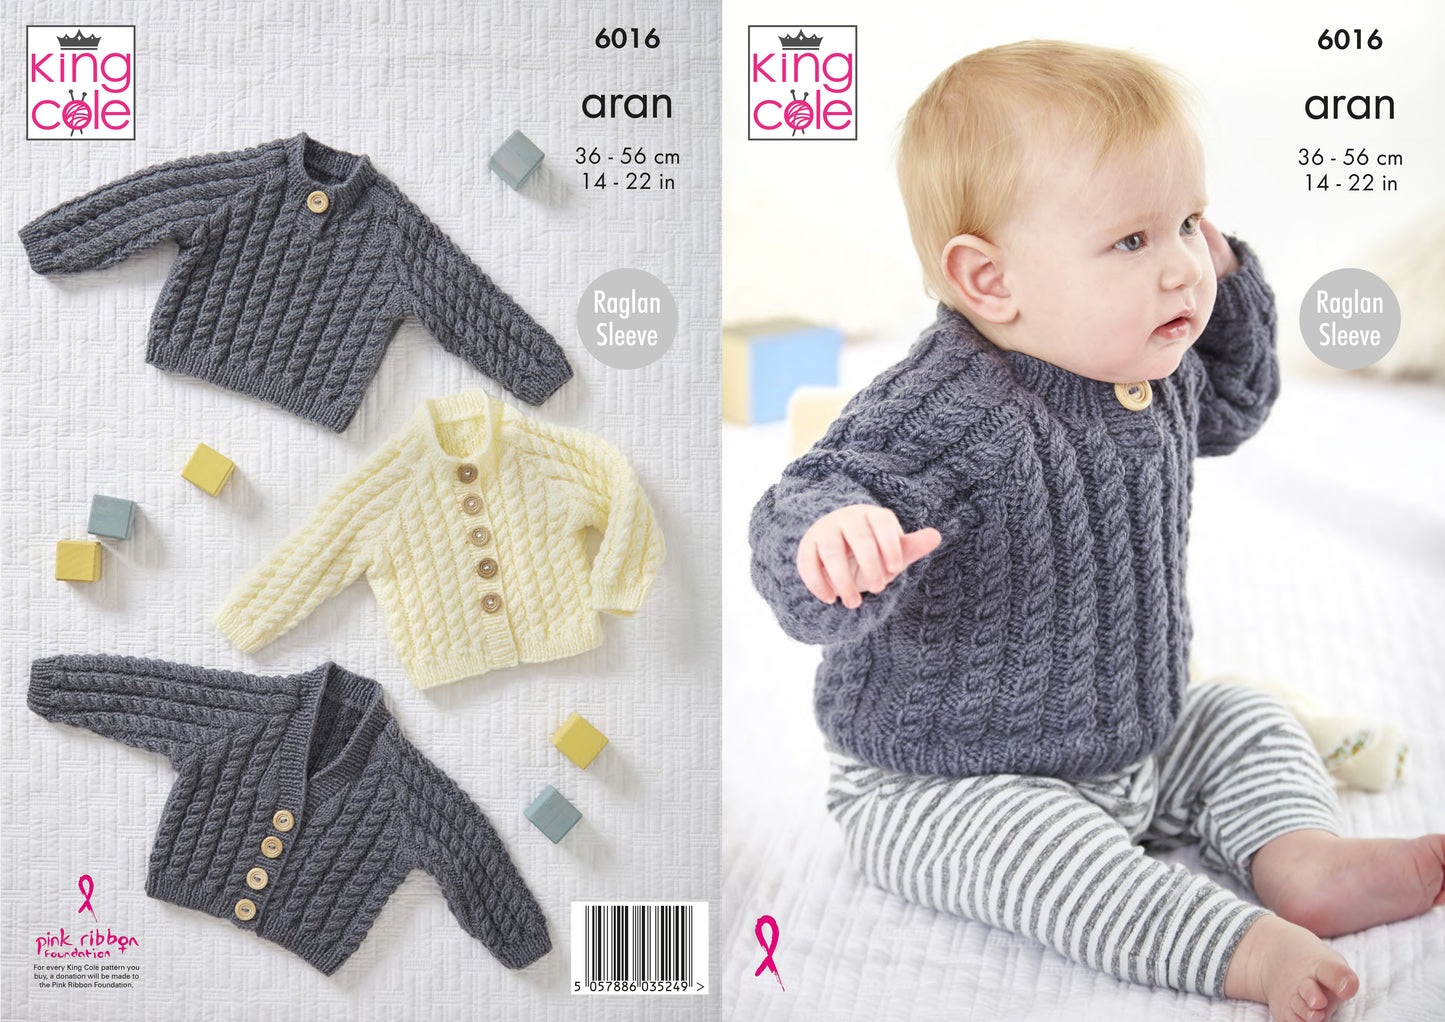 King Cole 6016 Baby Aran Knitting Pattern